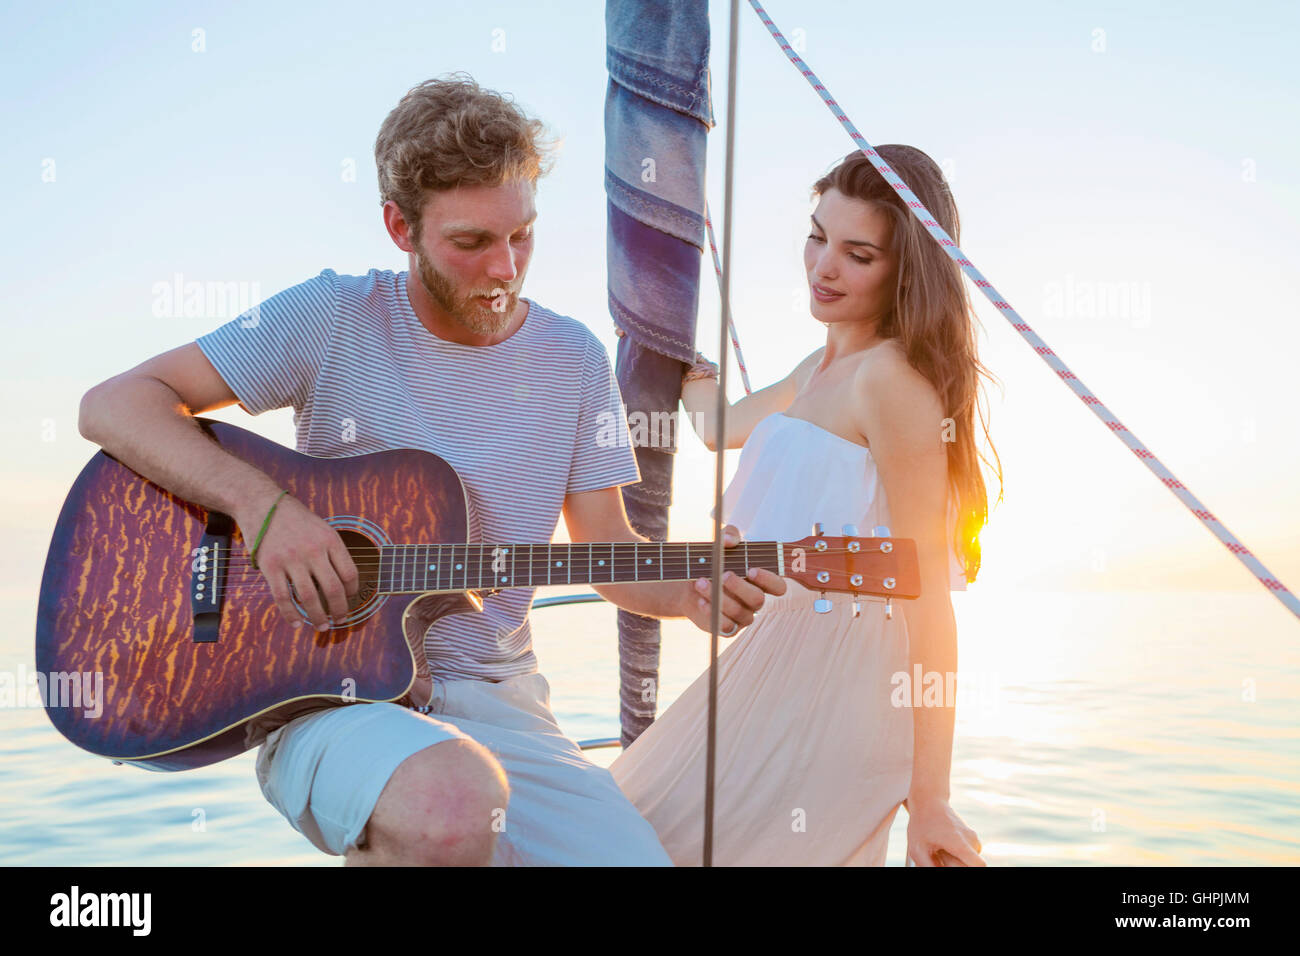 Young man playing guitar on sailboat Stock Photo